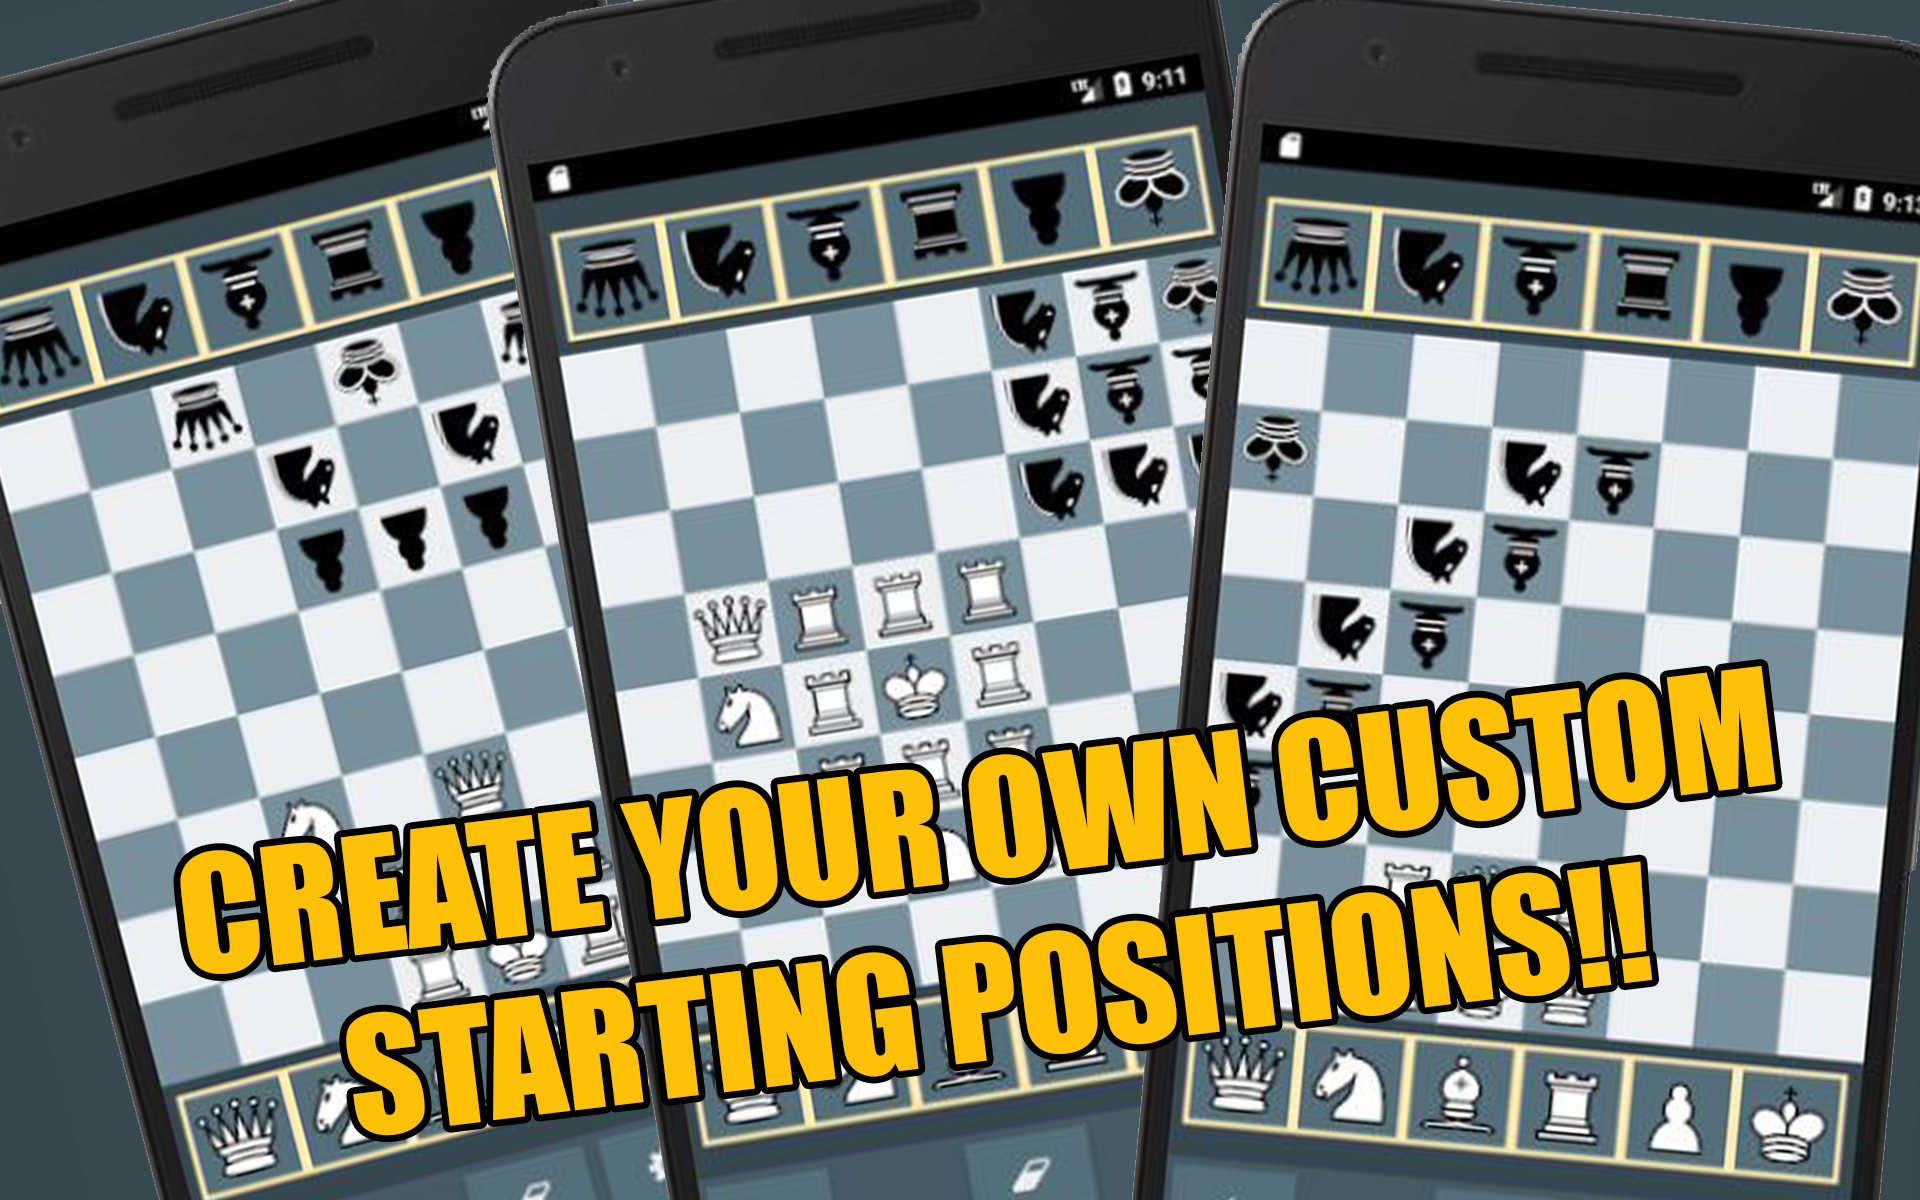 Chessboard: Offline 2-player Free Chess App